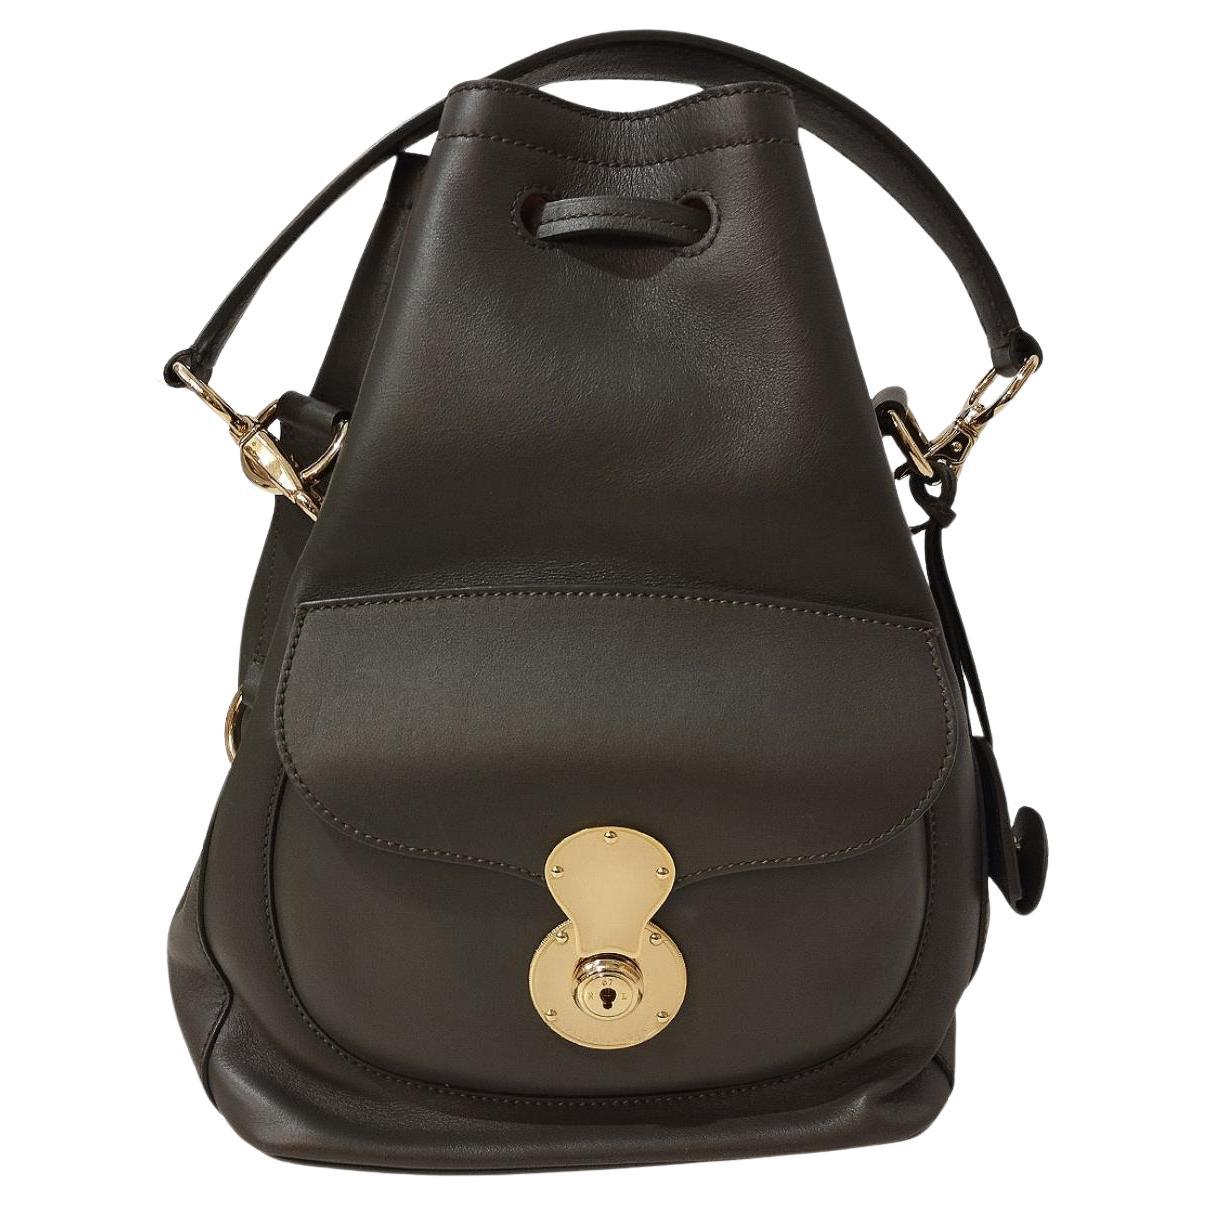 Ralph Lauren Ricky satchel size Unica For Sale